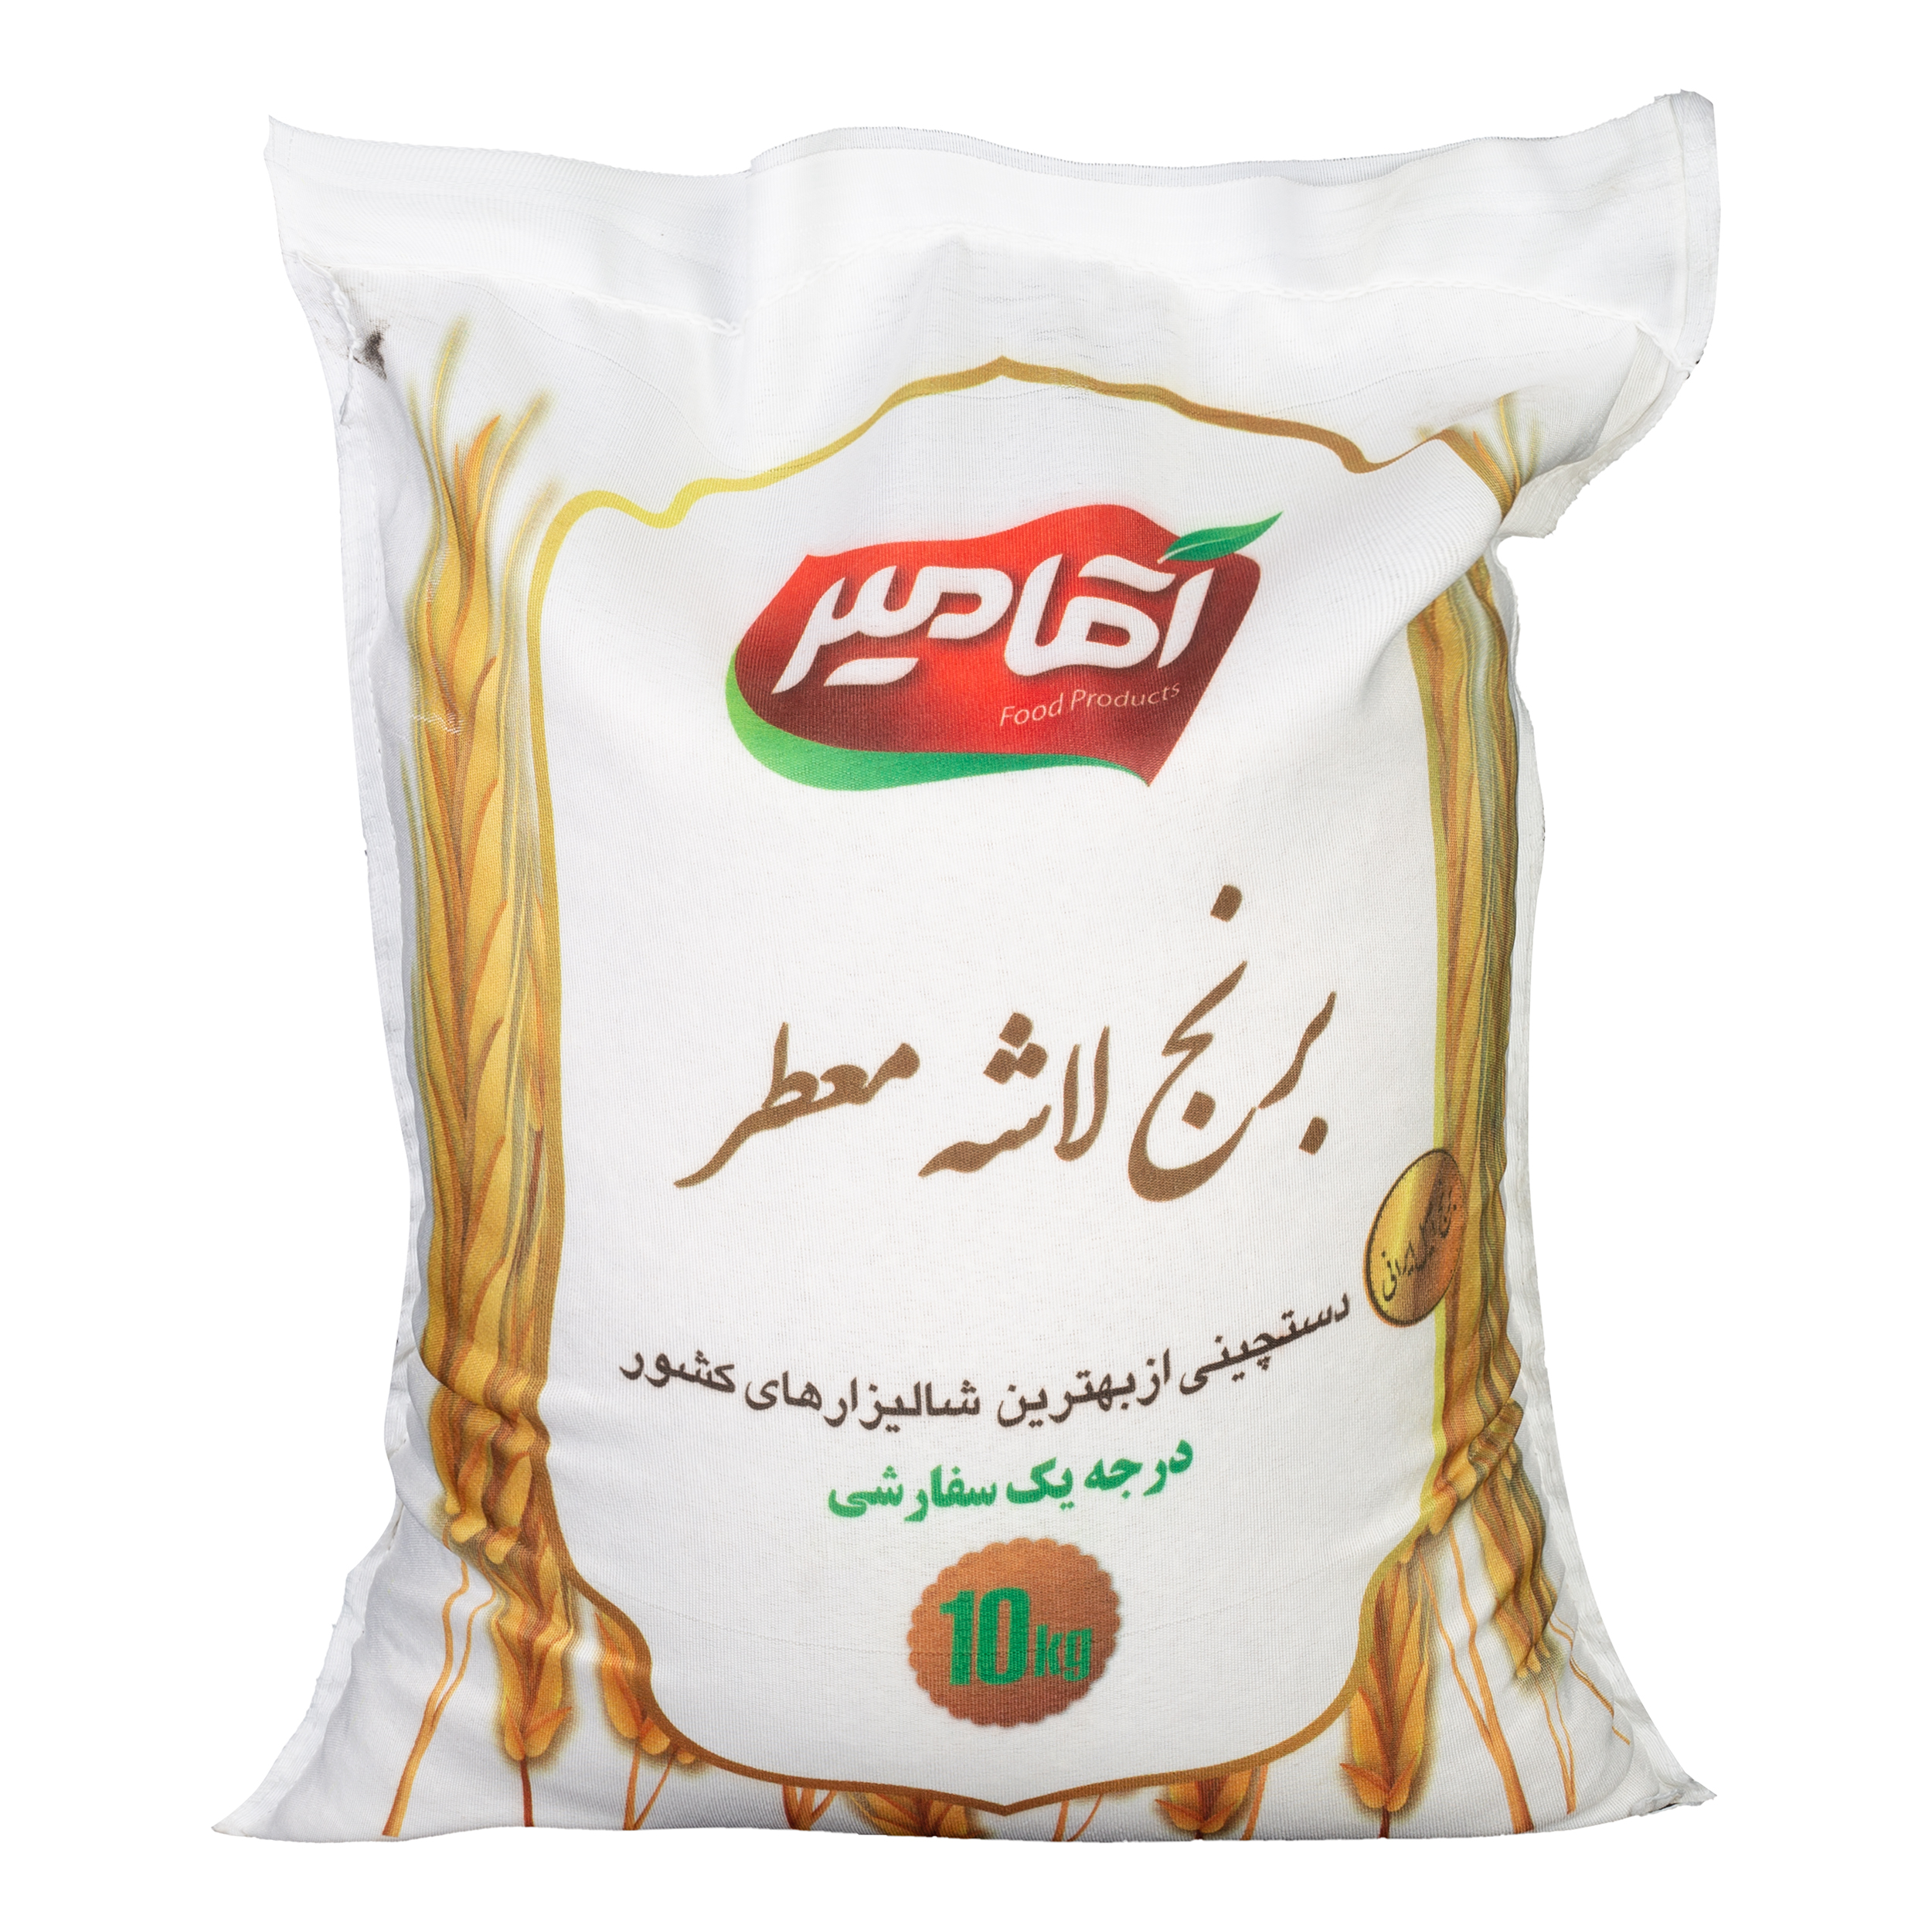 نکته خرید - قیمت روز برنج لاشه معطر شیرودی آقامیر - 10 کیلوگرم خرید